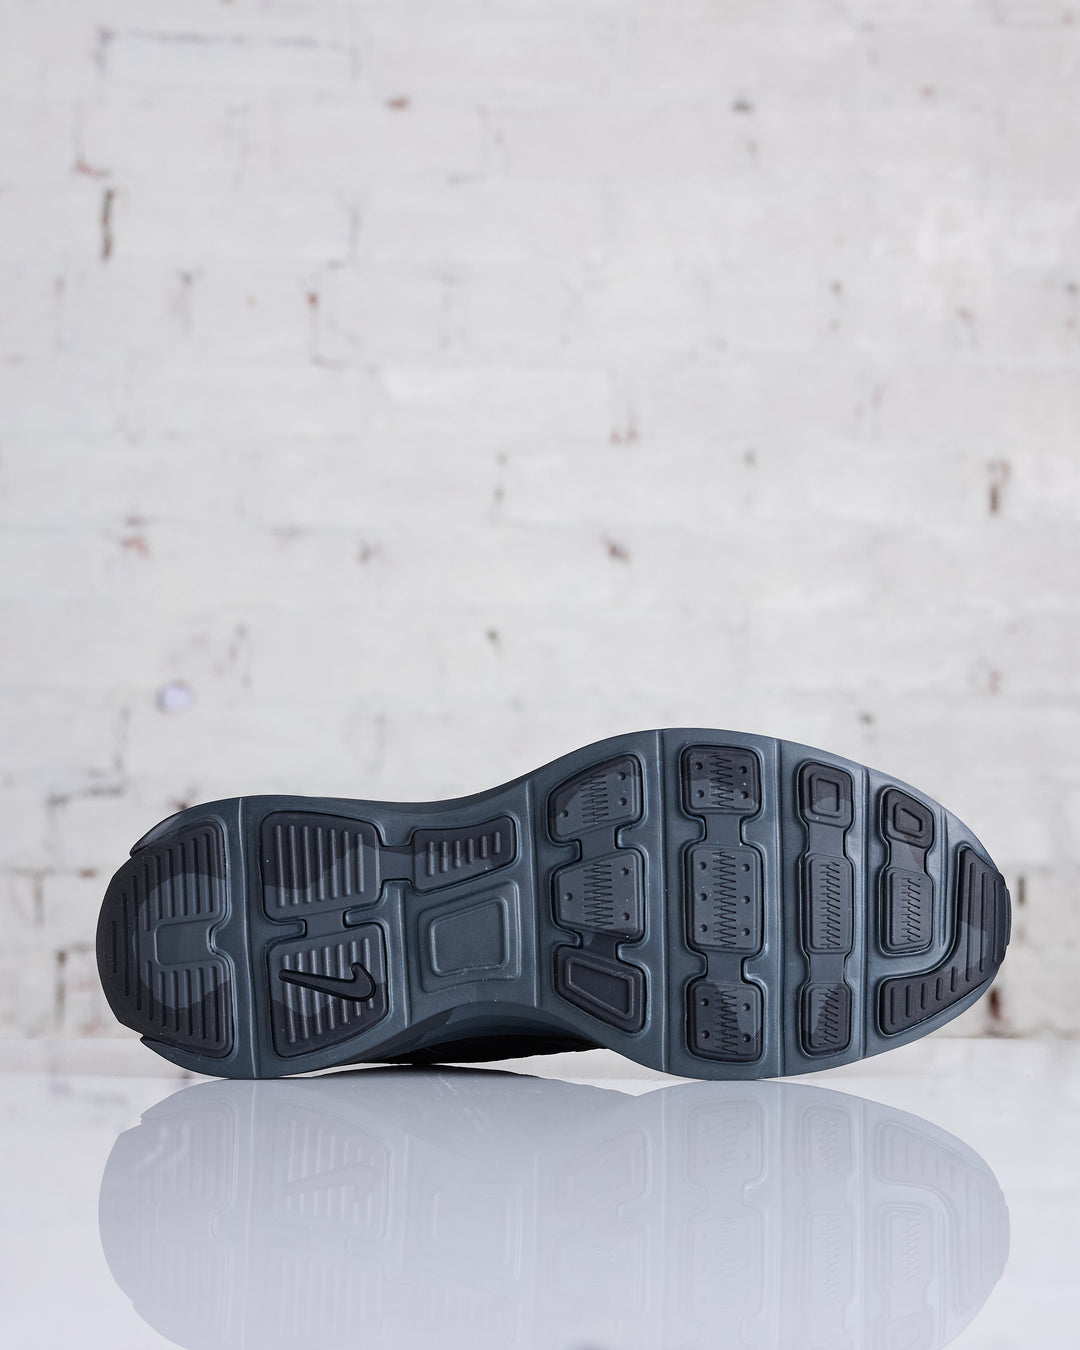 Nike Men's Lunar Roam Dk Smoke Grey/Black-Dk Smoke Grey